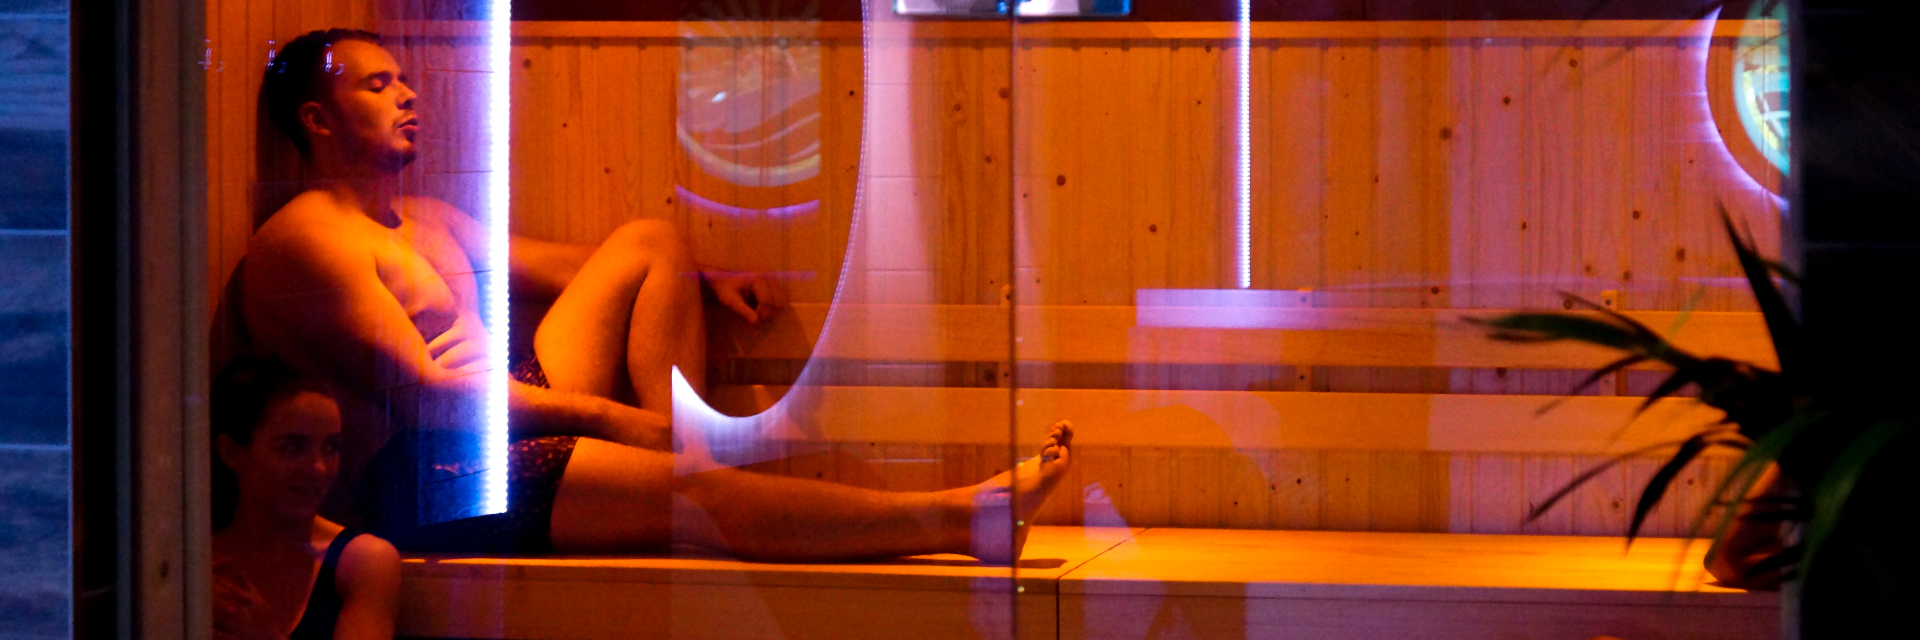 Sauna | Steam Room | Vitality Pool | Relaxation